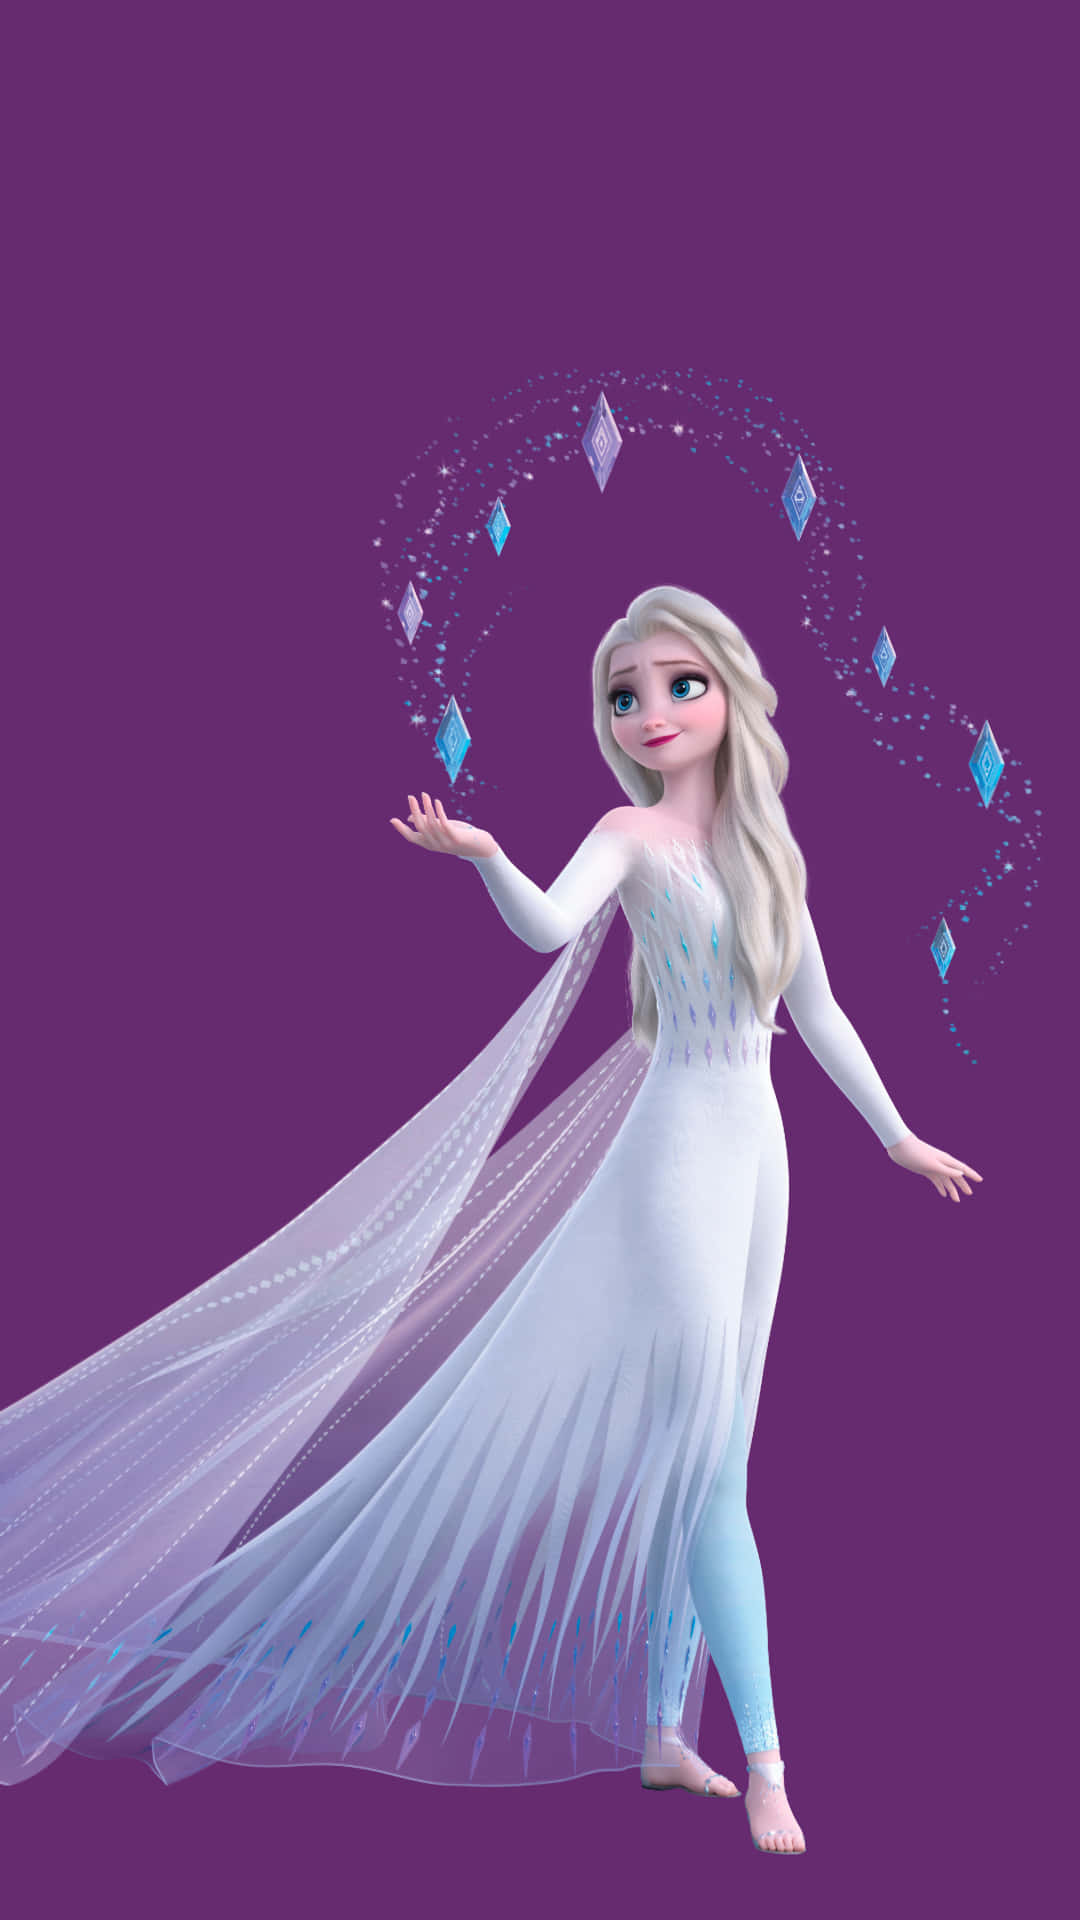 Billedeelsa Bærer En Smuk Hvid Kjole For Første Gang I Disneys Frost 2 Wallpaper